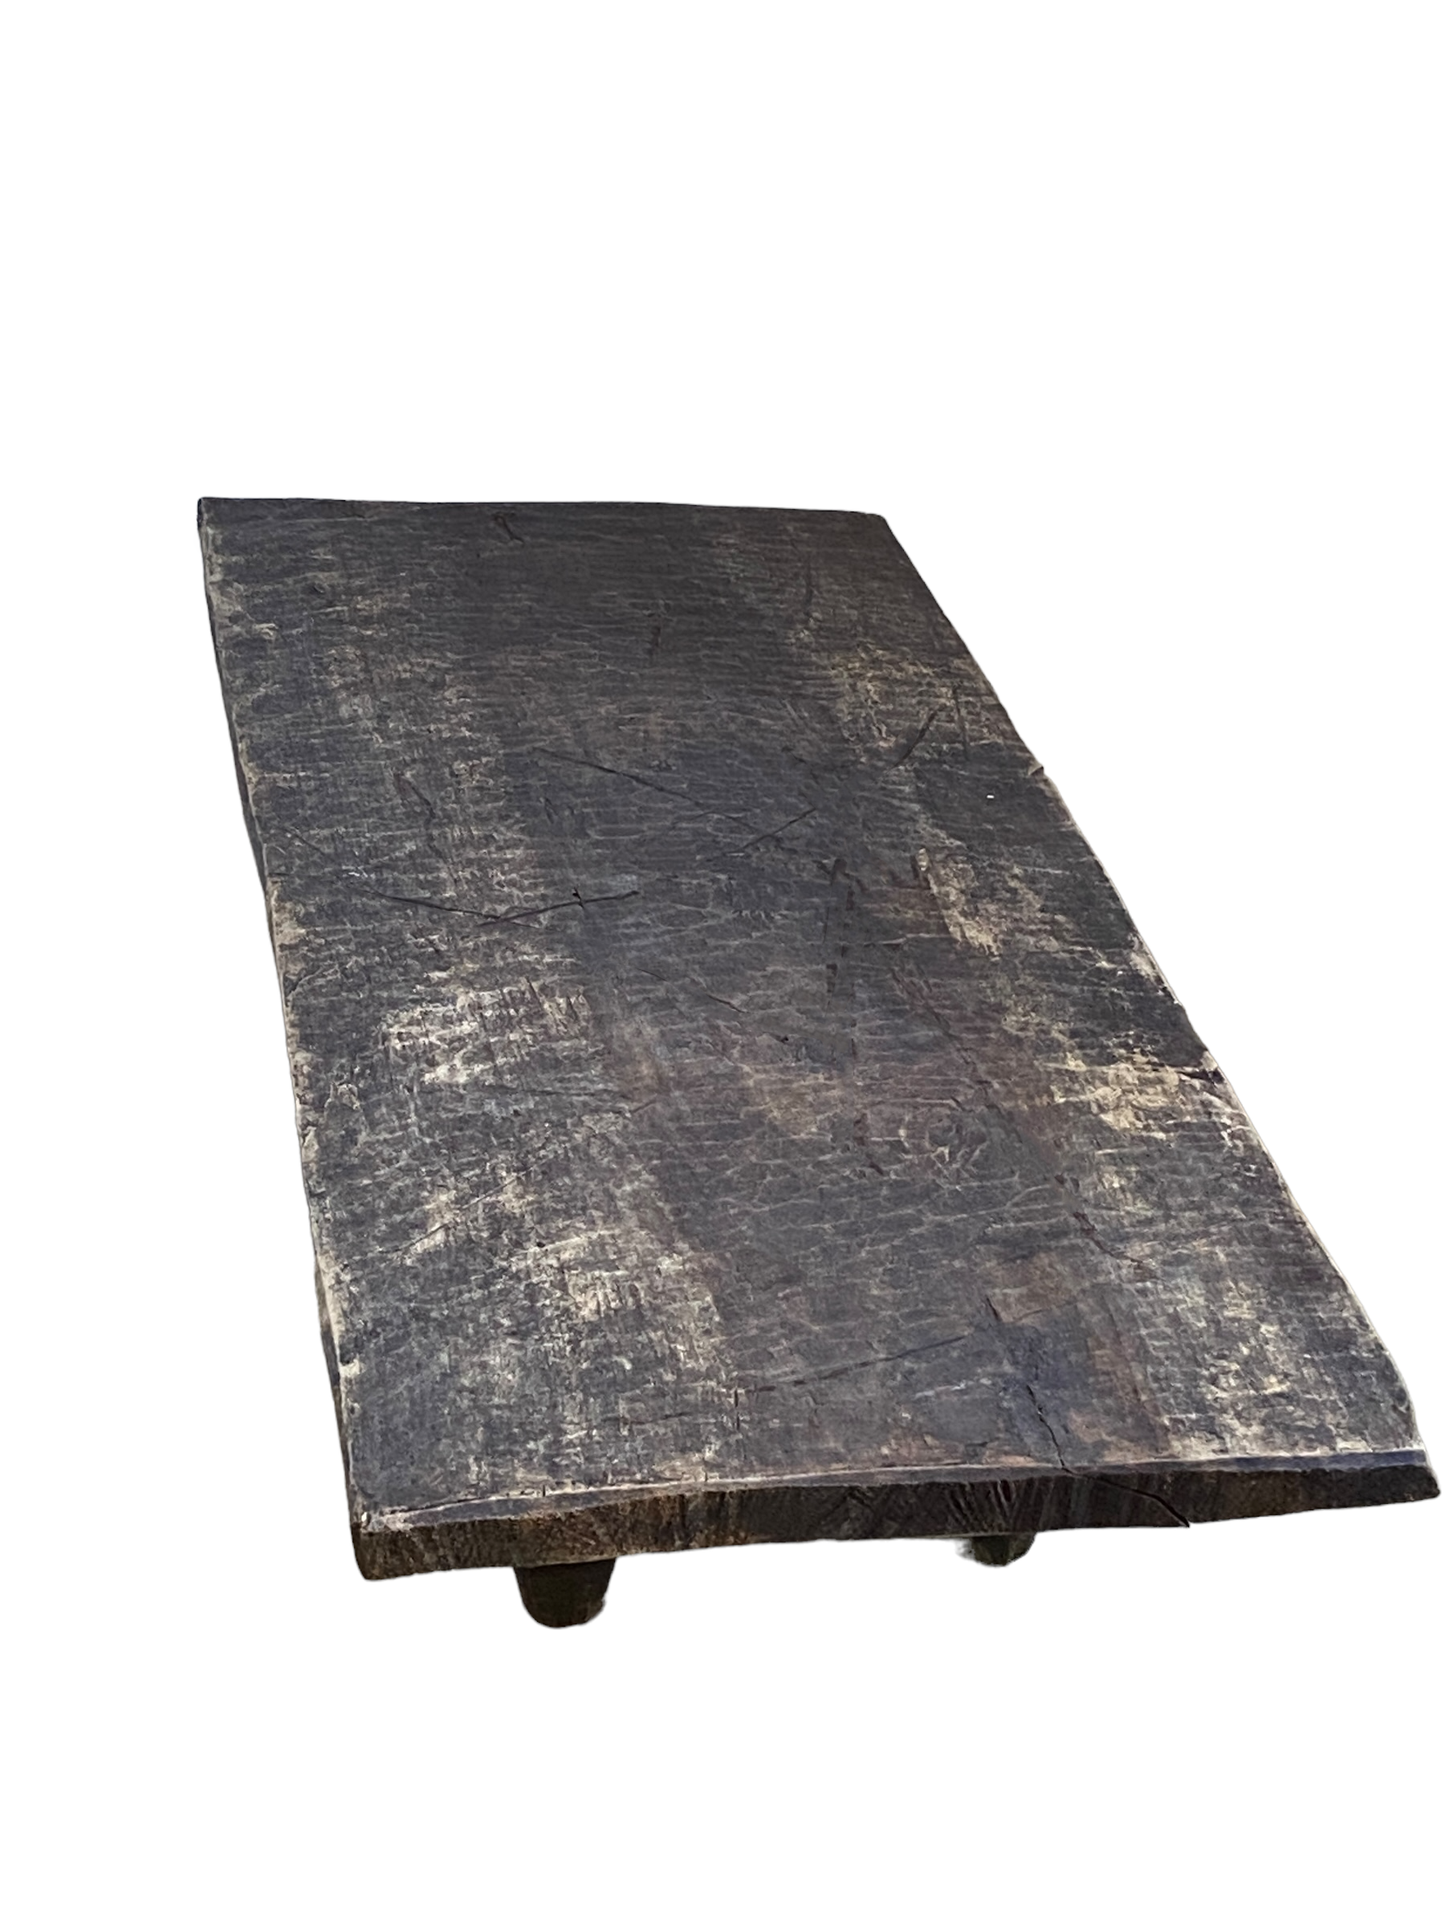 # 4982 Superb Rustic Old  African Senufo Stool / Table  I coast 40" W